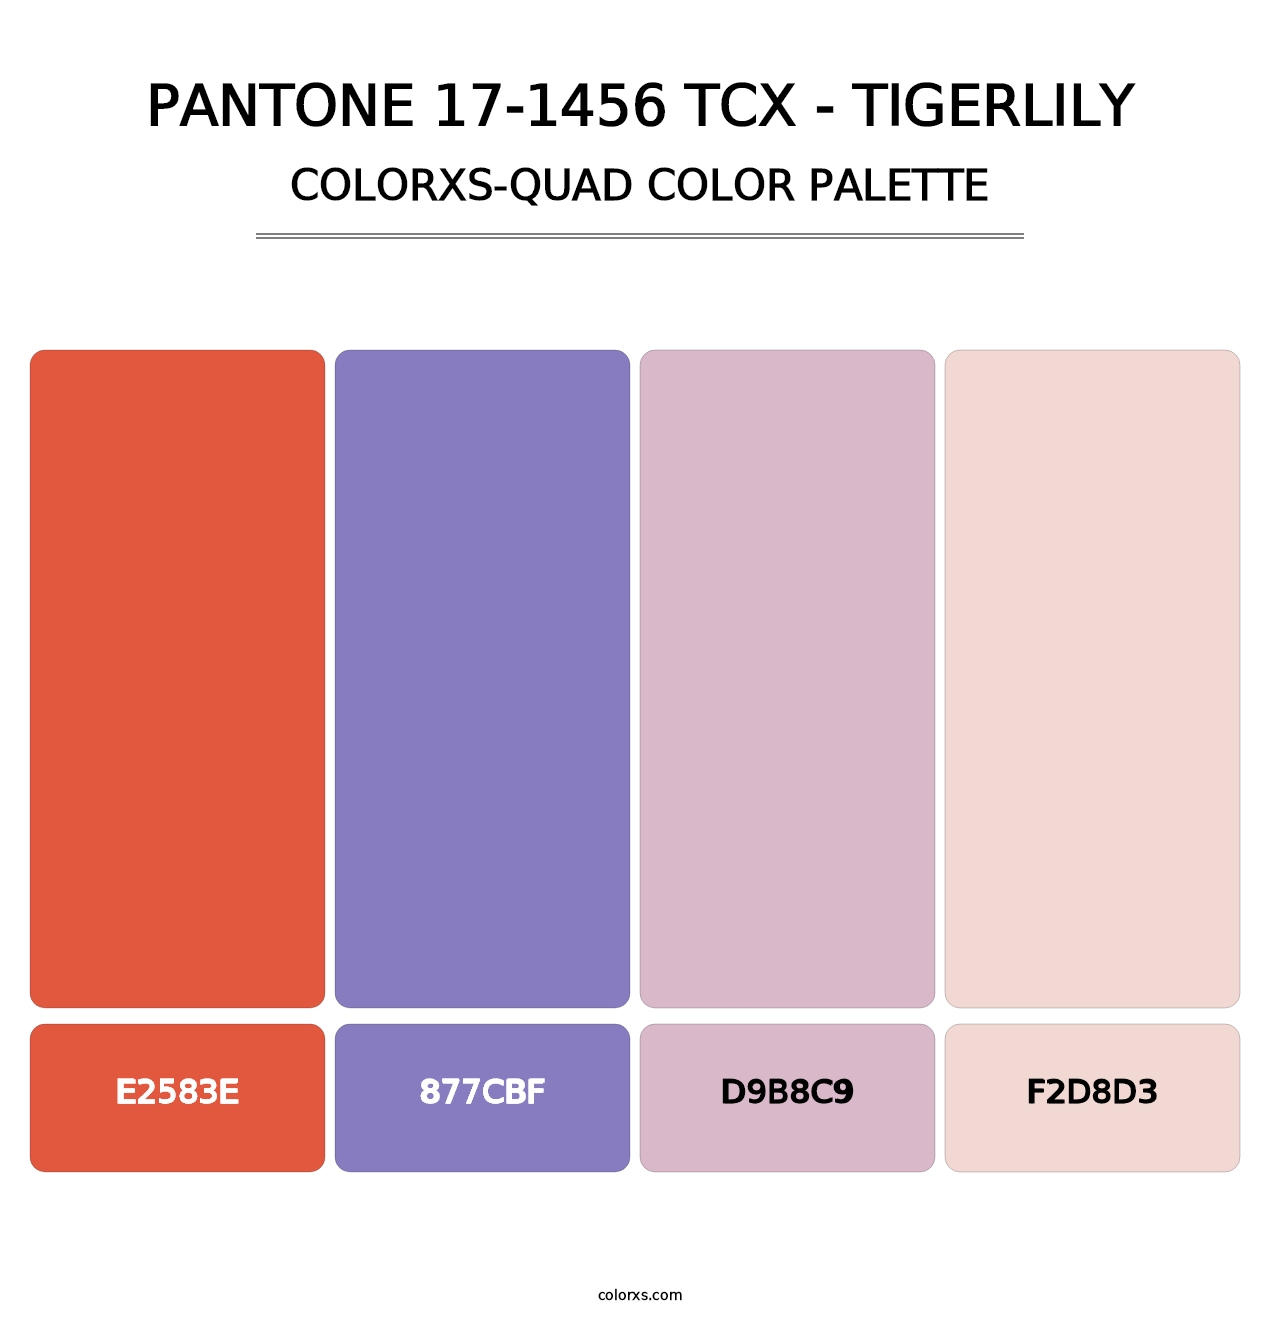 PANTONE 17-1456 TCX - Tigerlily - Colorxs Quad Palette